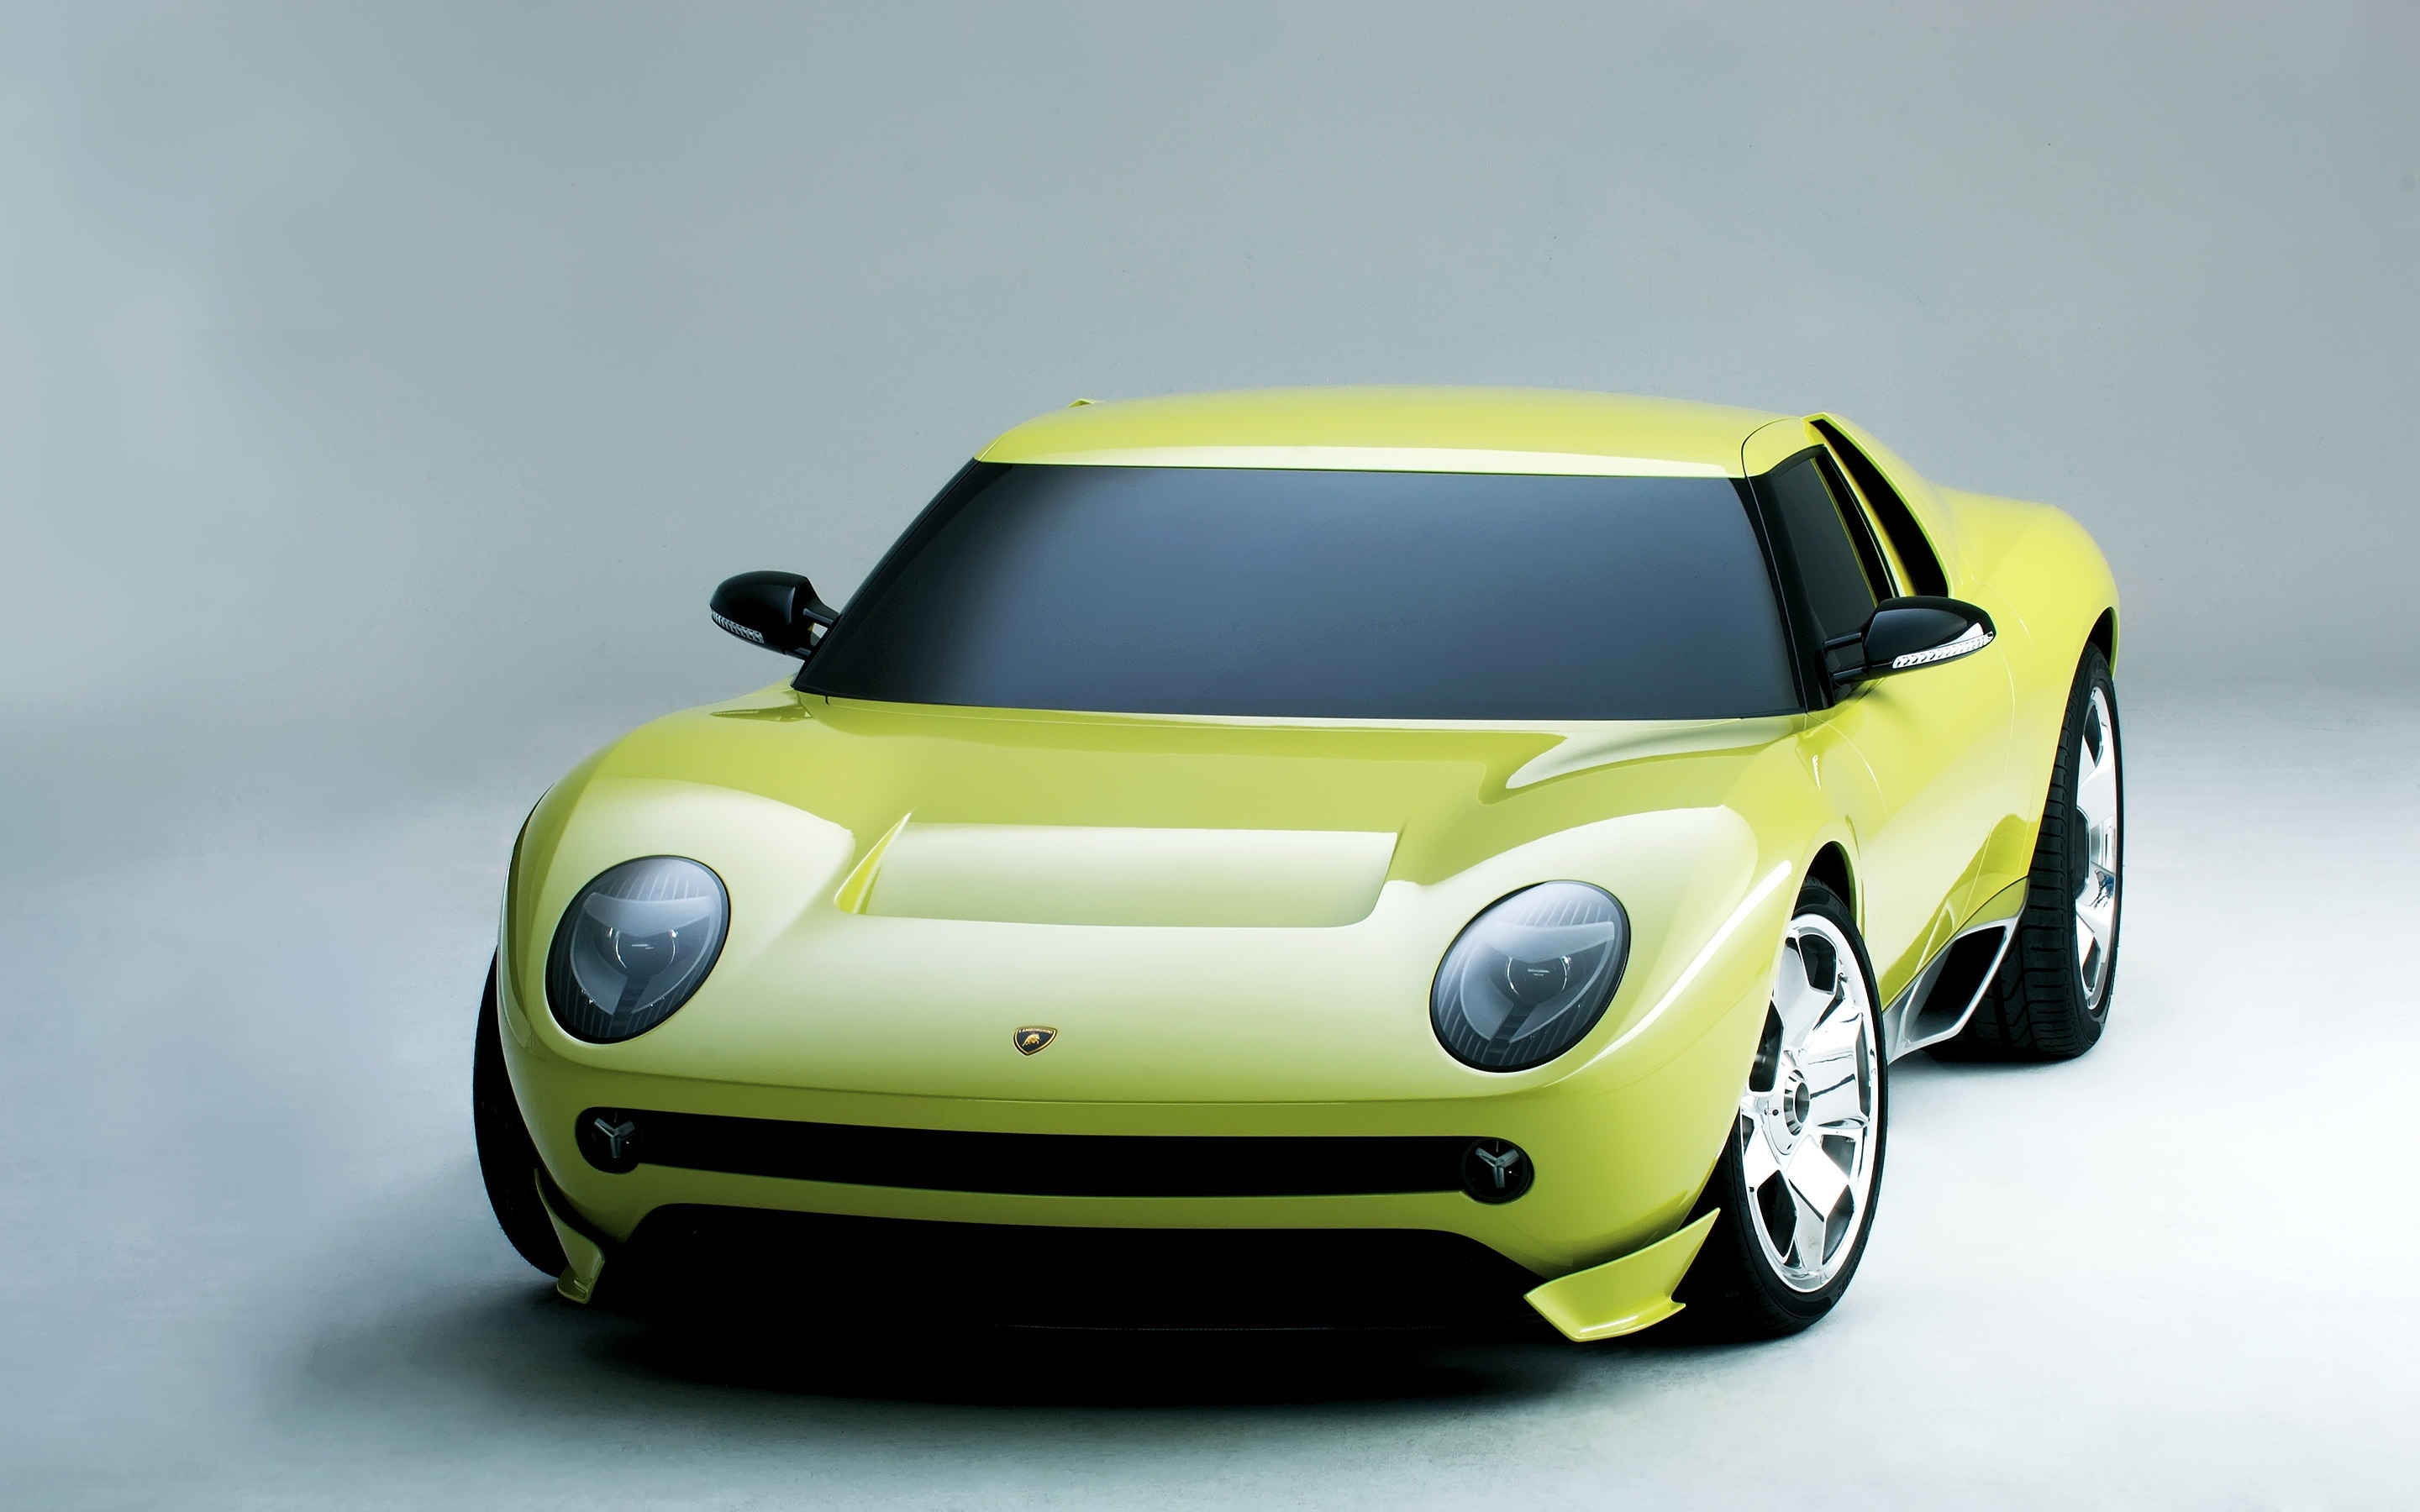 Lamborghini Miura Concept for 2880 x 1800 Retina Display resolution